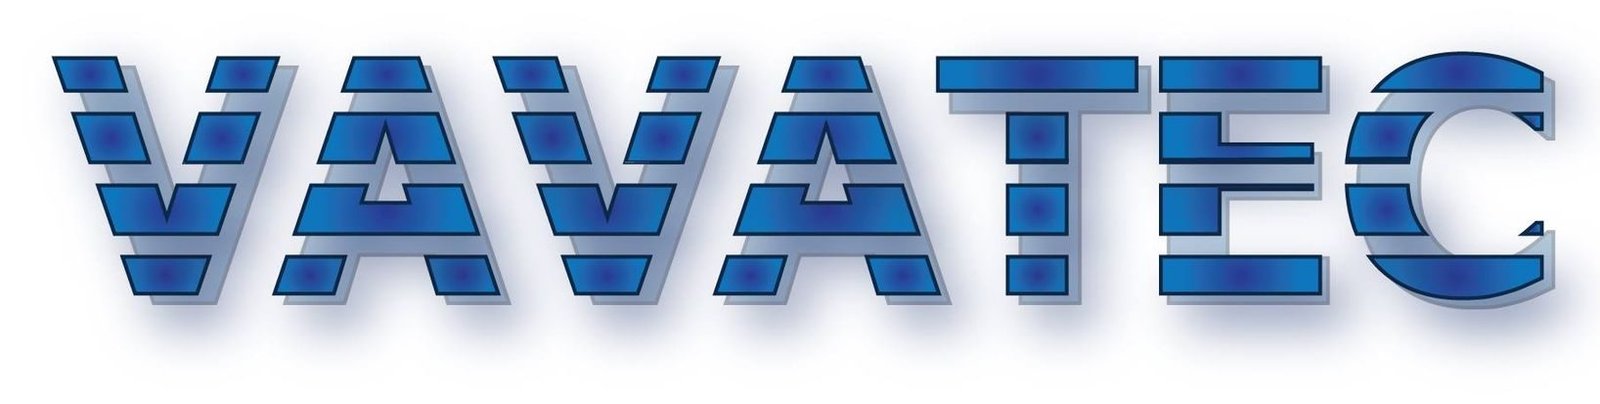 VAVATEC large logo